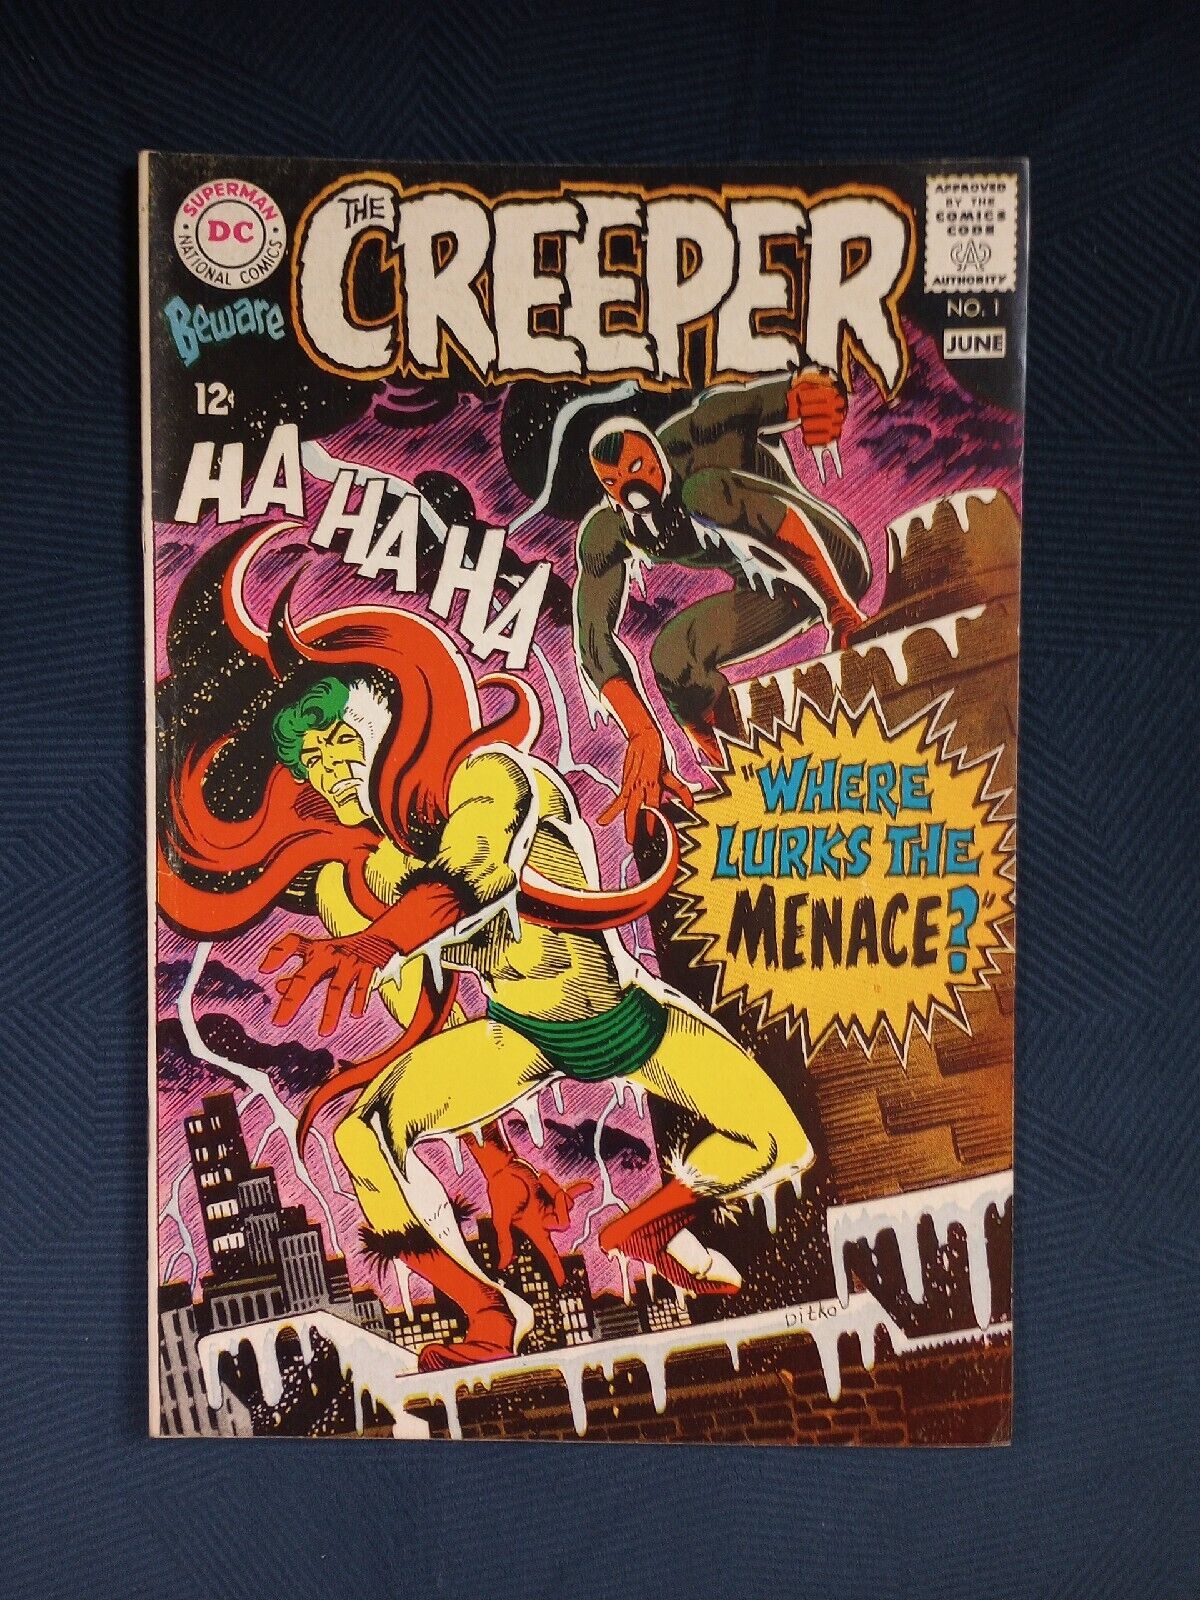 BEWARE THE CREEPER #1 (1968) NM Steve Ditko Cover-Story-Art + 2nd Creeper App.